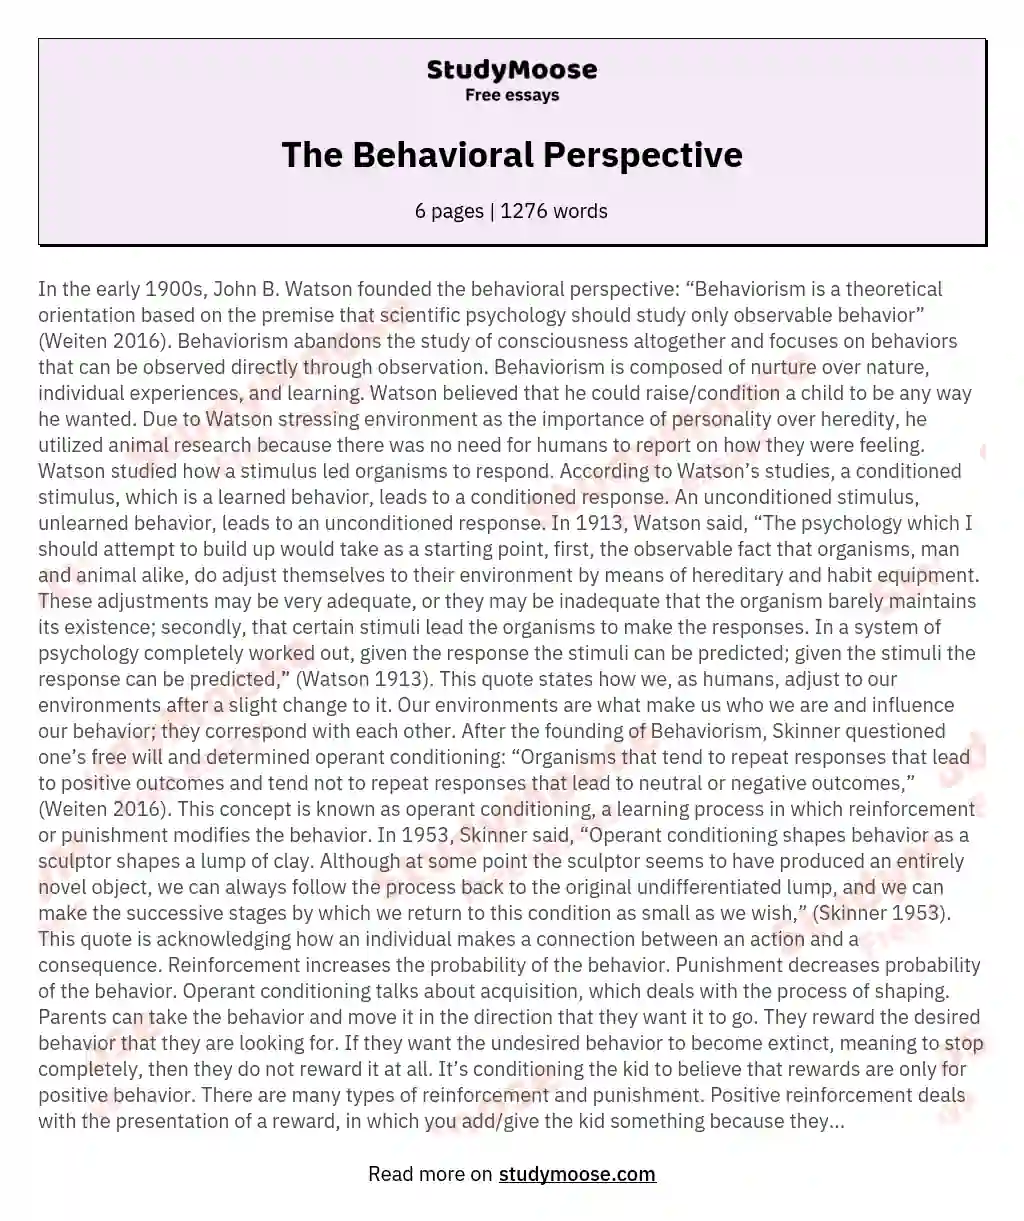 The Behavioral Perspective essay